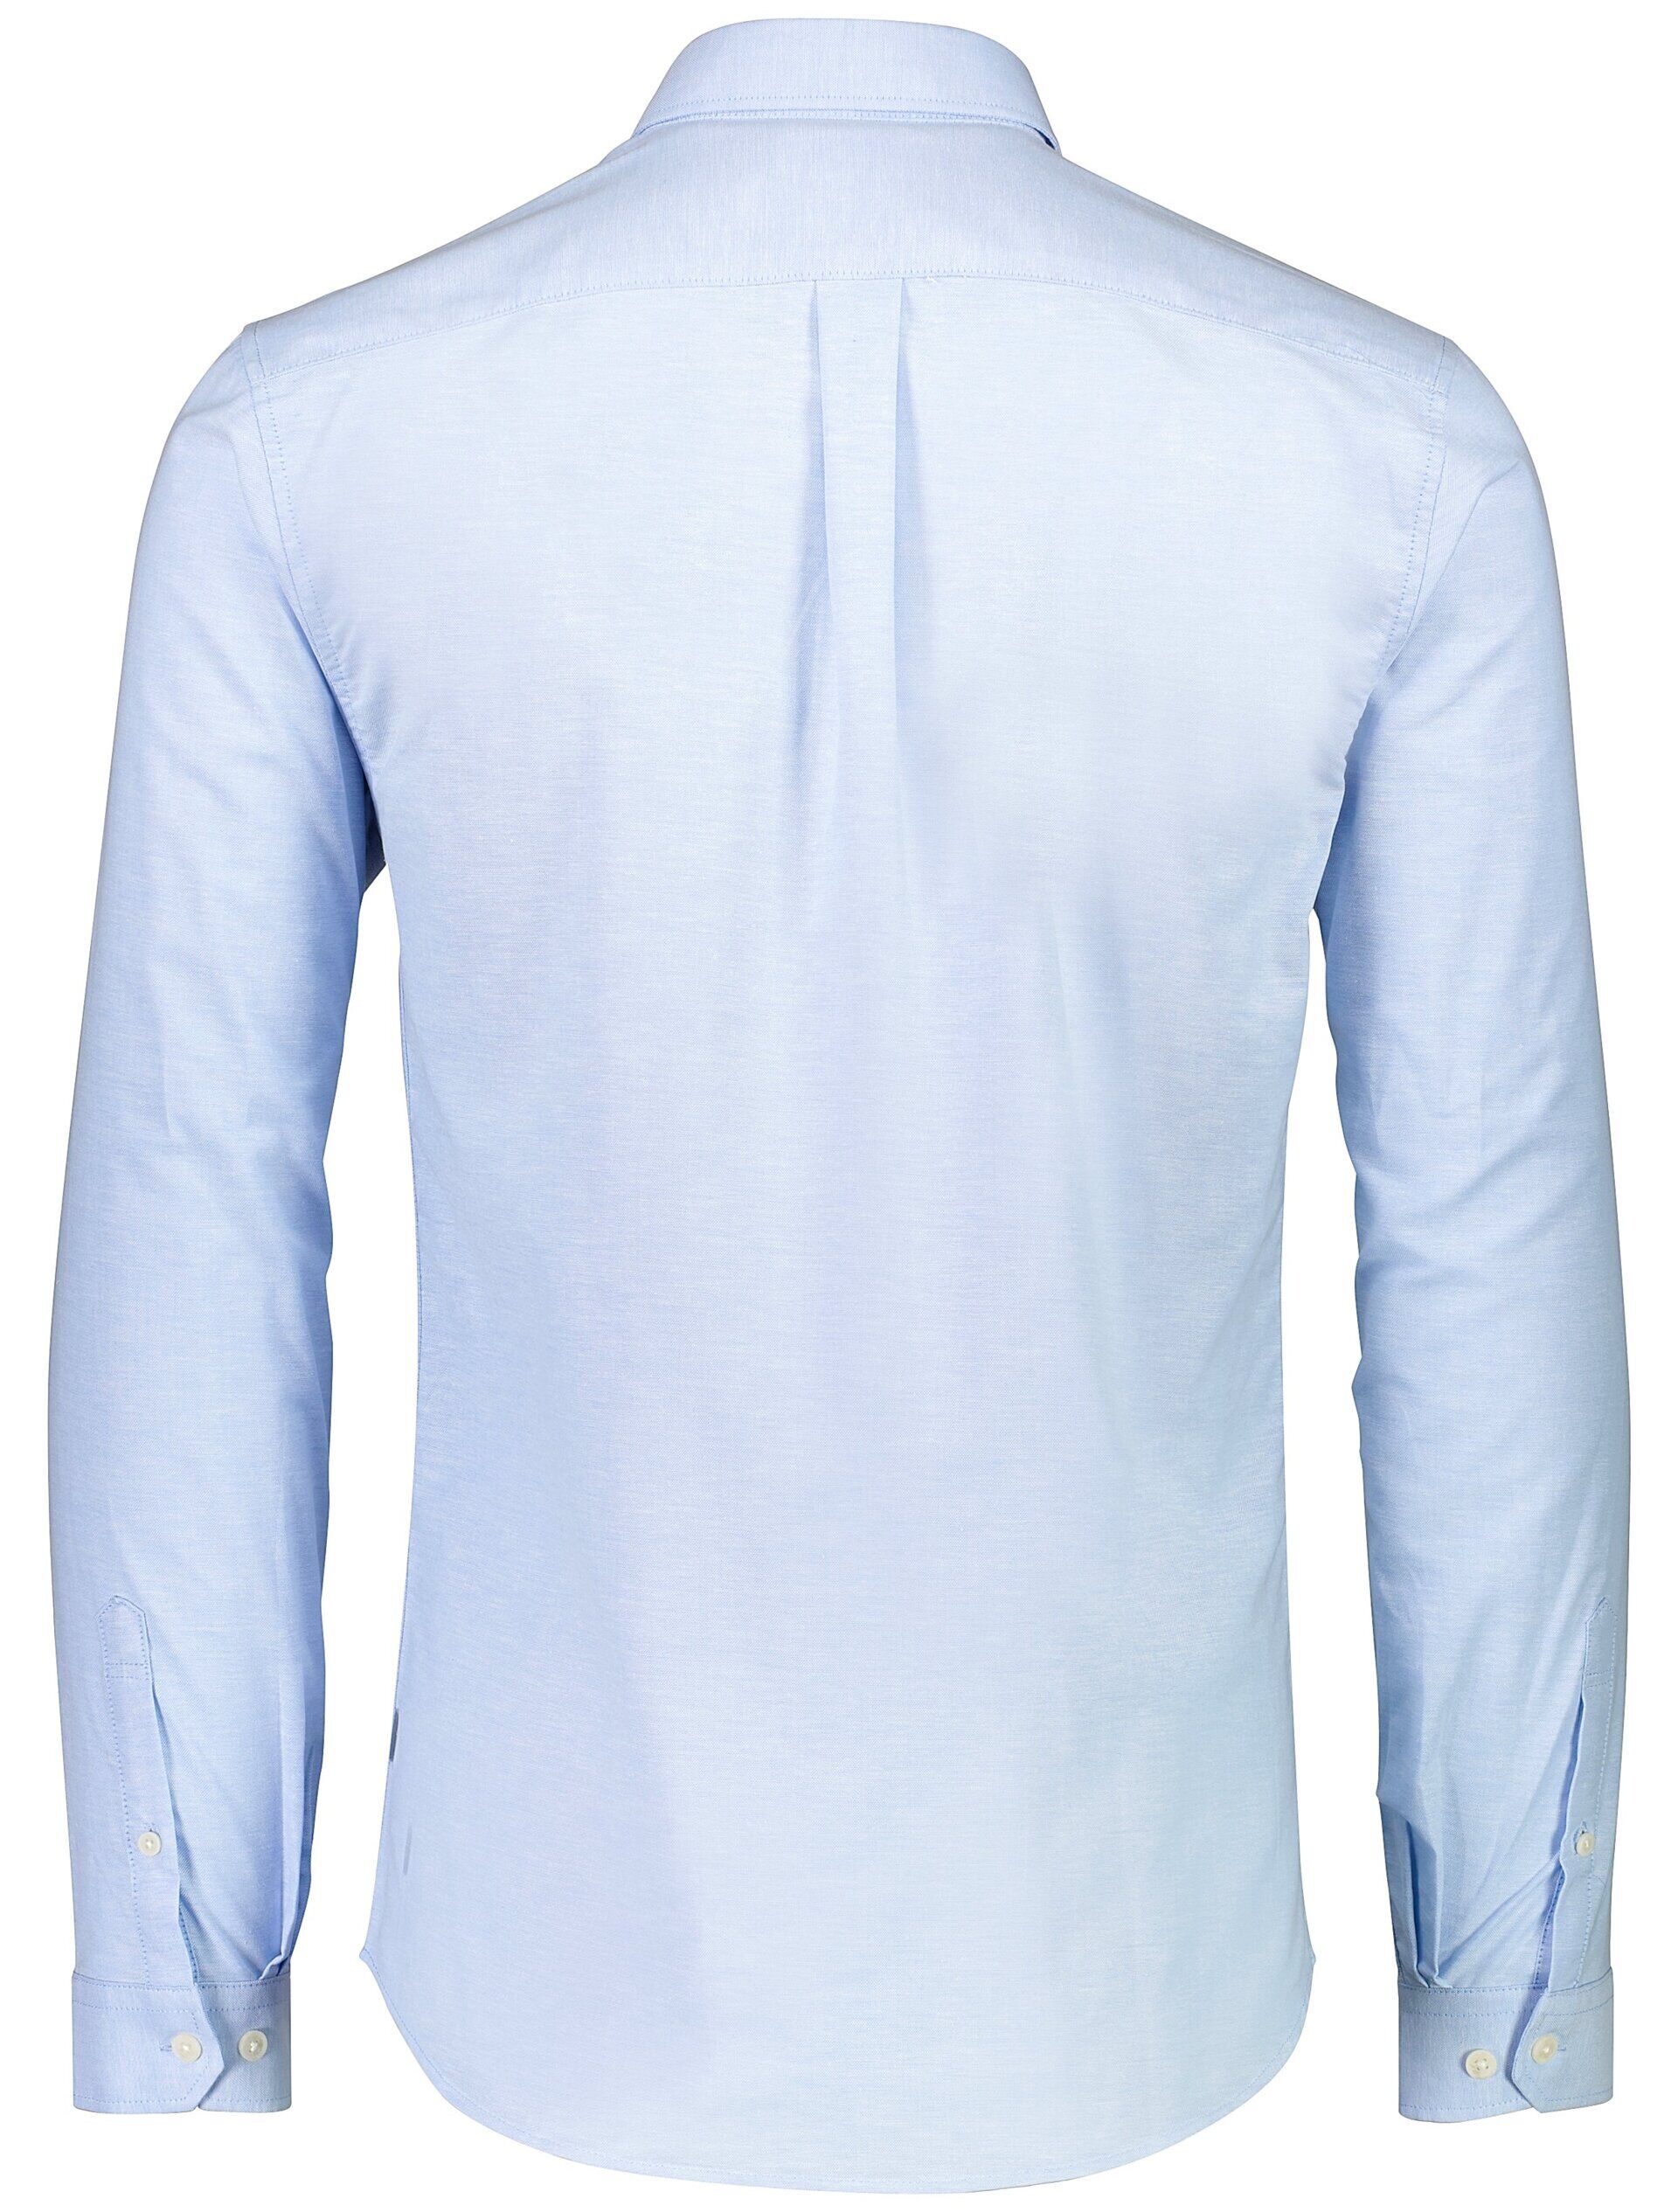 Oxford shirt 30-203174BK